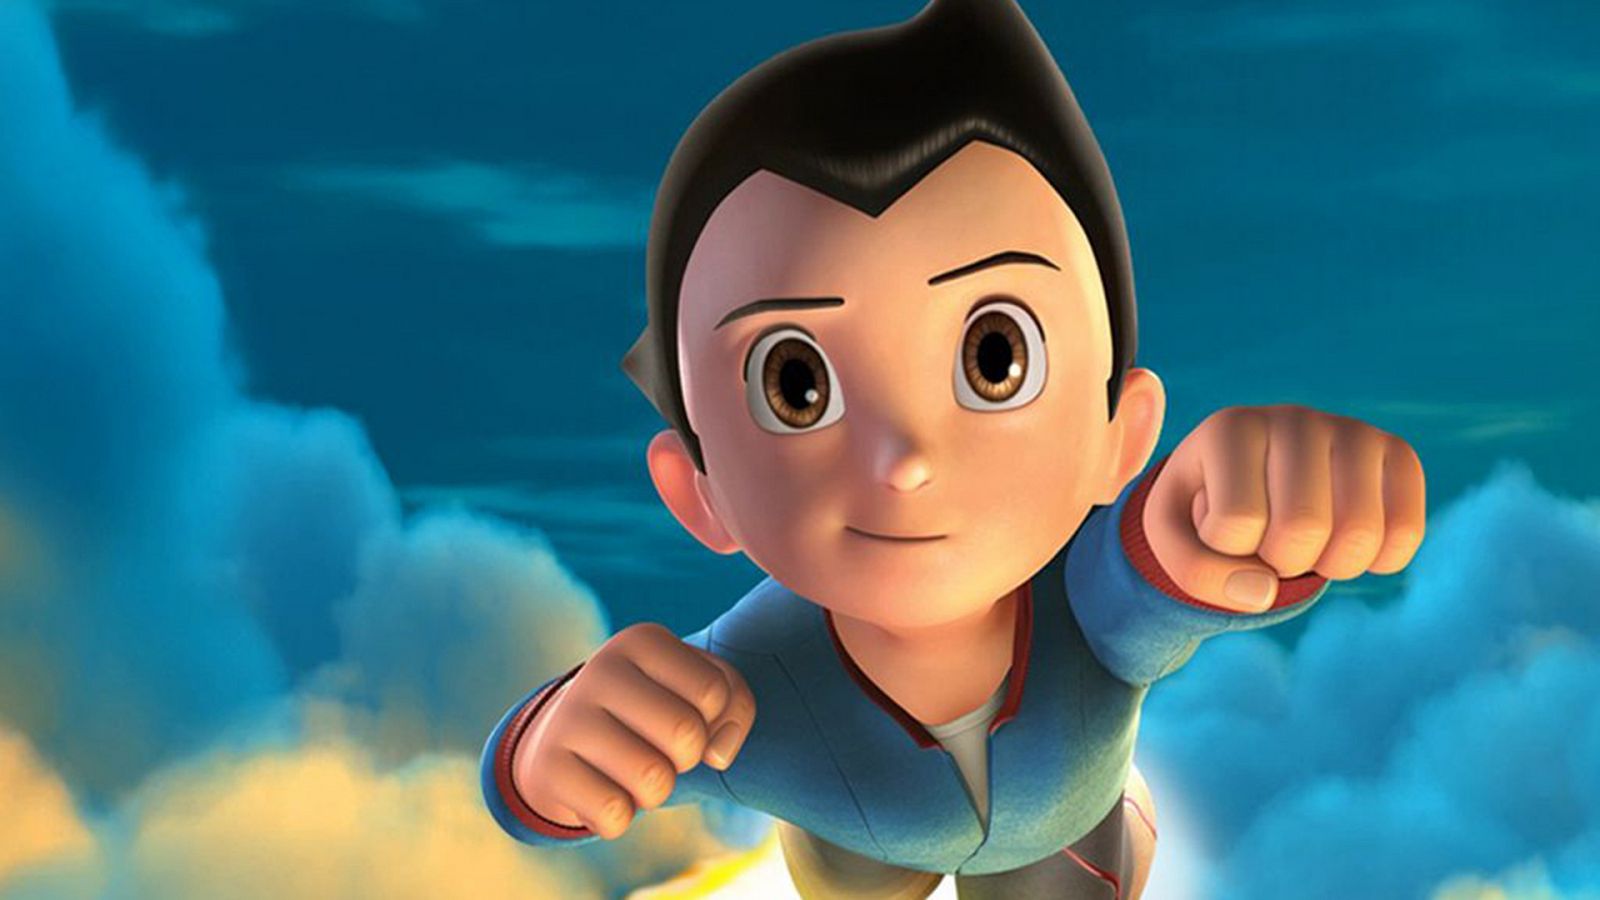 Cine infantil - Astro Boy - Ver ahora